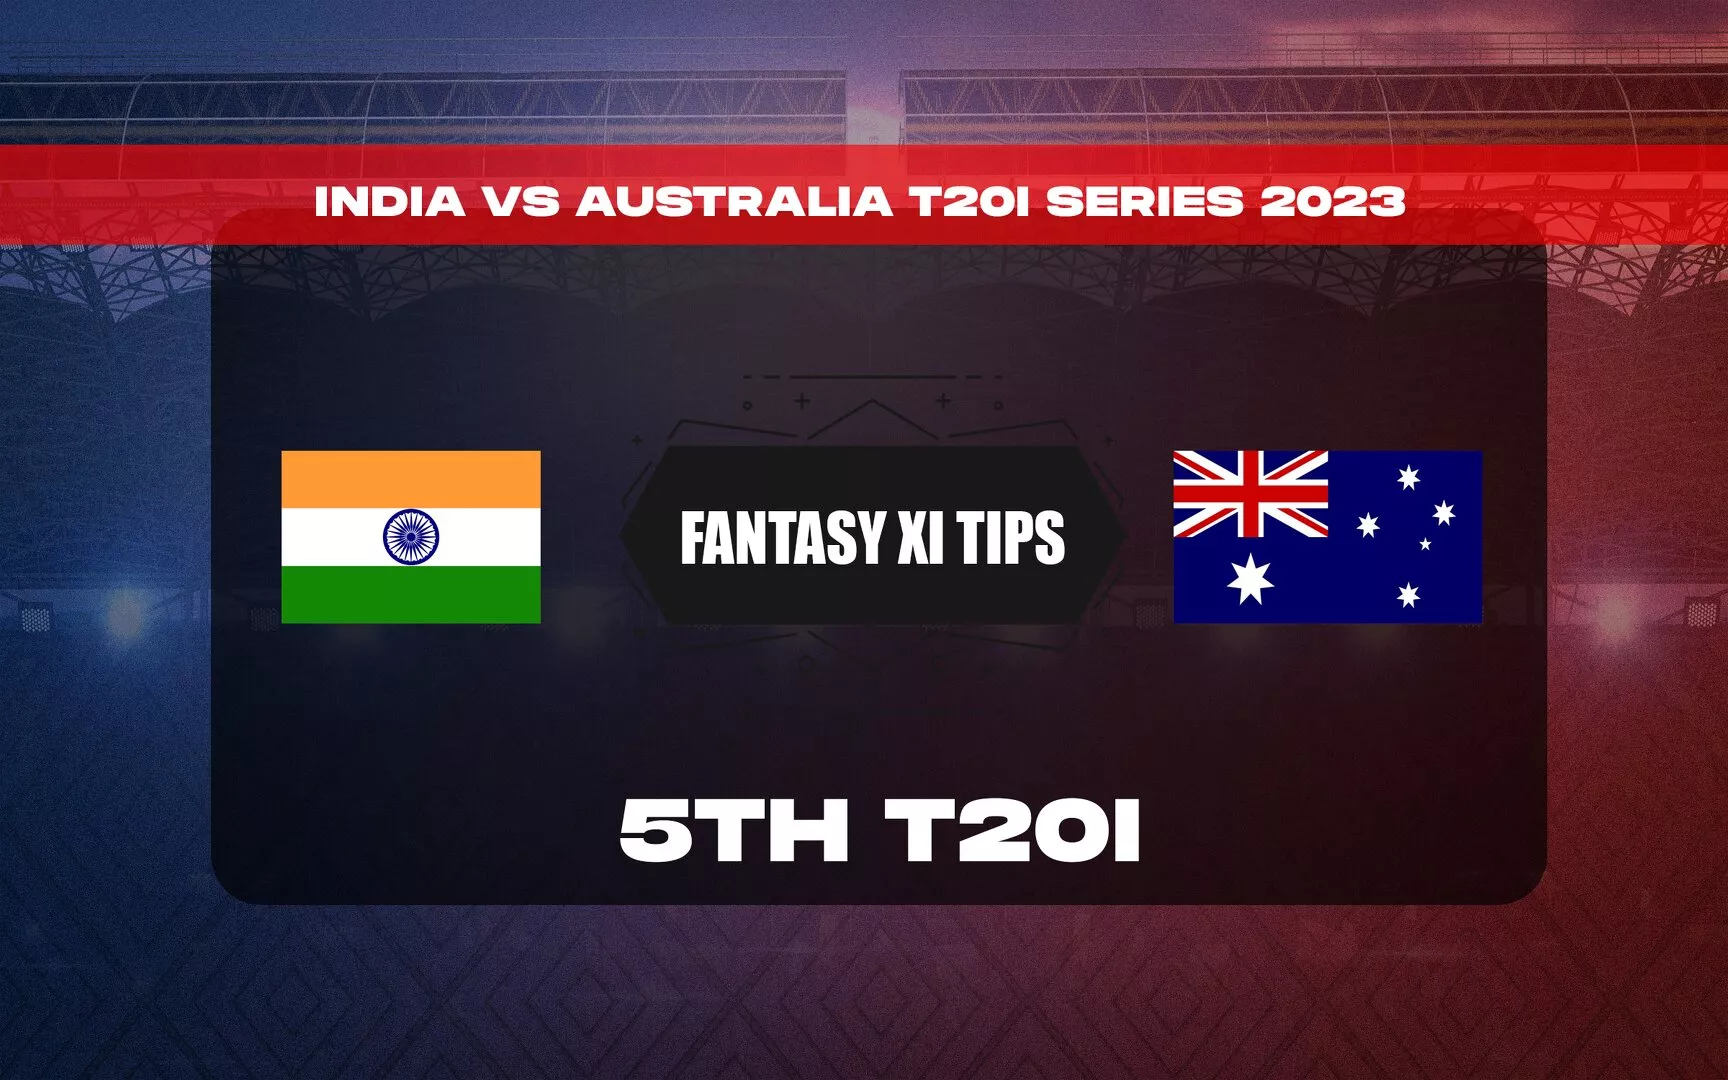 IND vs AUS Dream11 Prediction, Dream11 Playing XI, Today 5th T20I, India vs Australia T20I series 2023